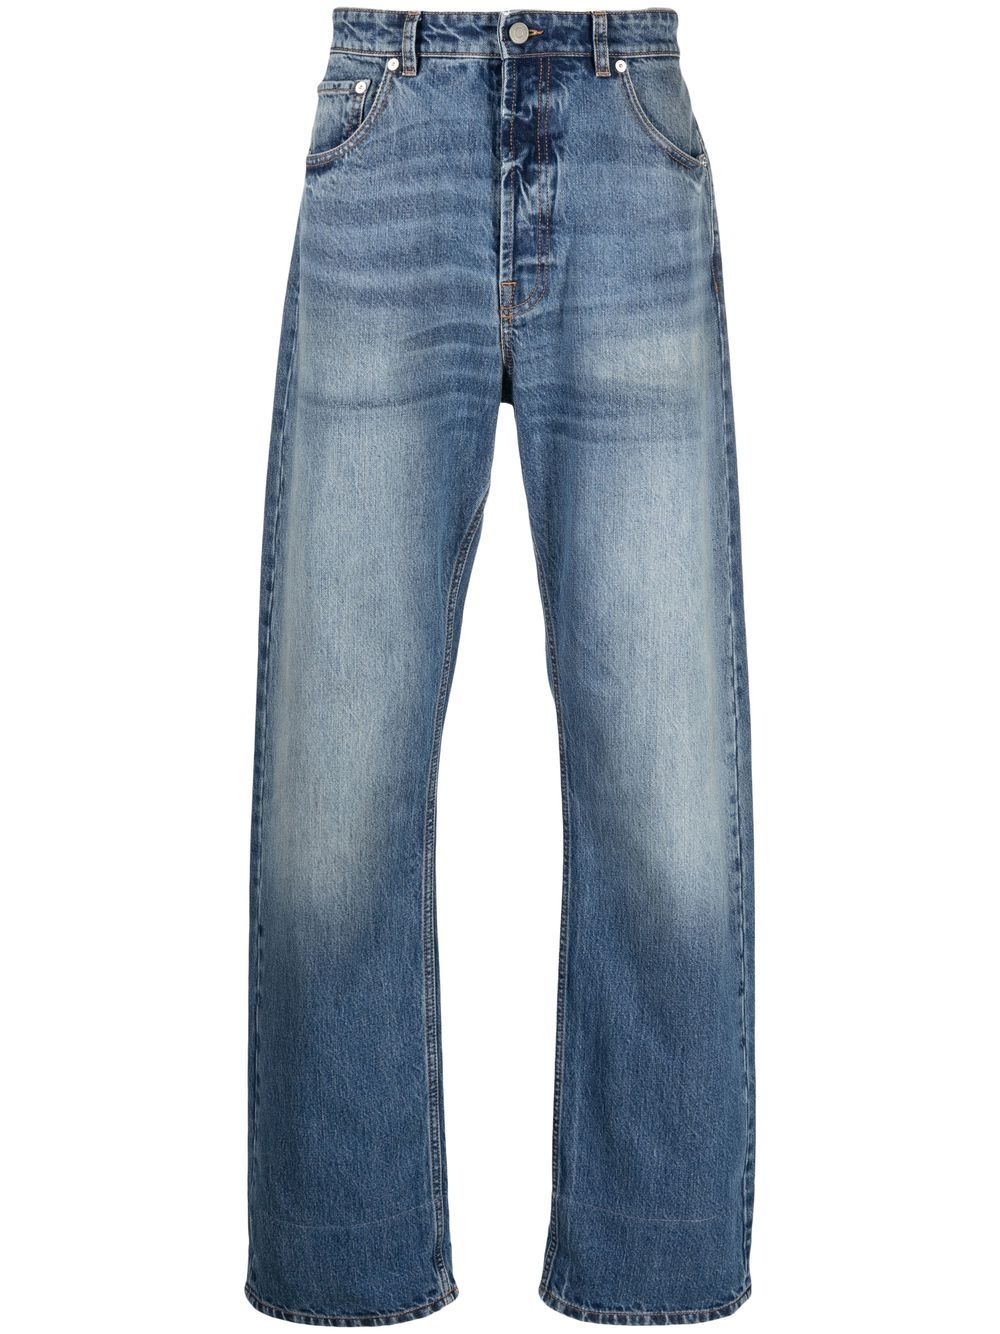 stonewashed denim jeans - 1